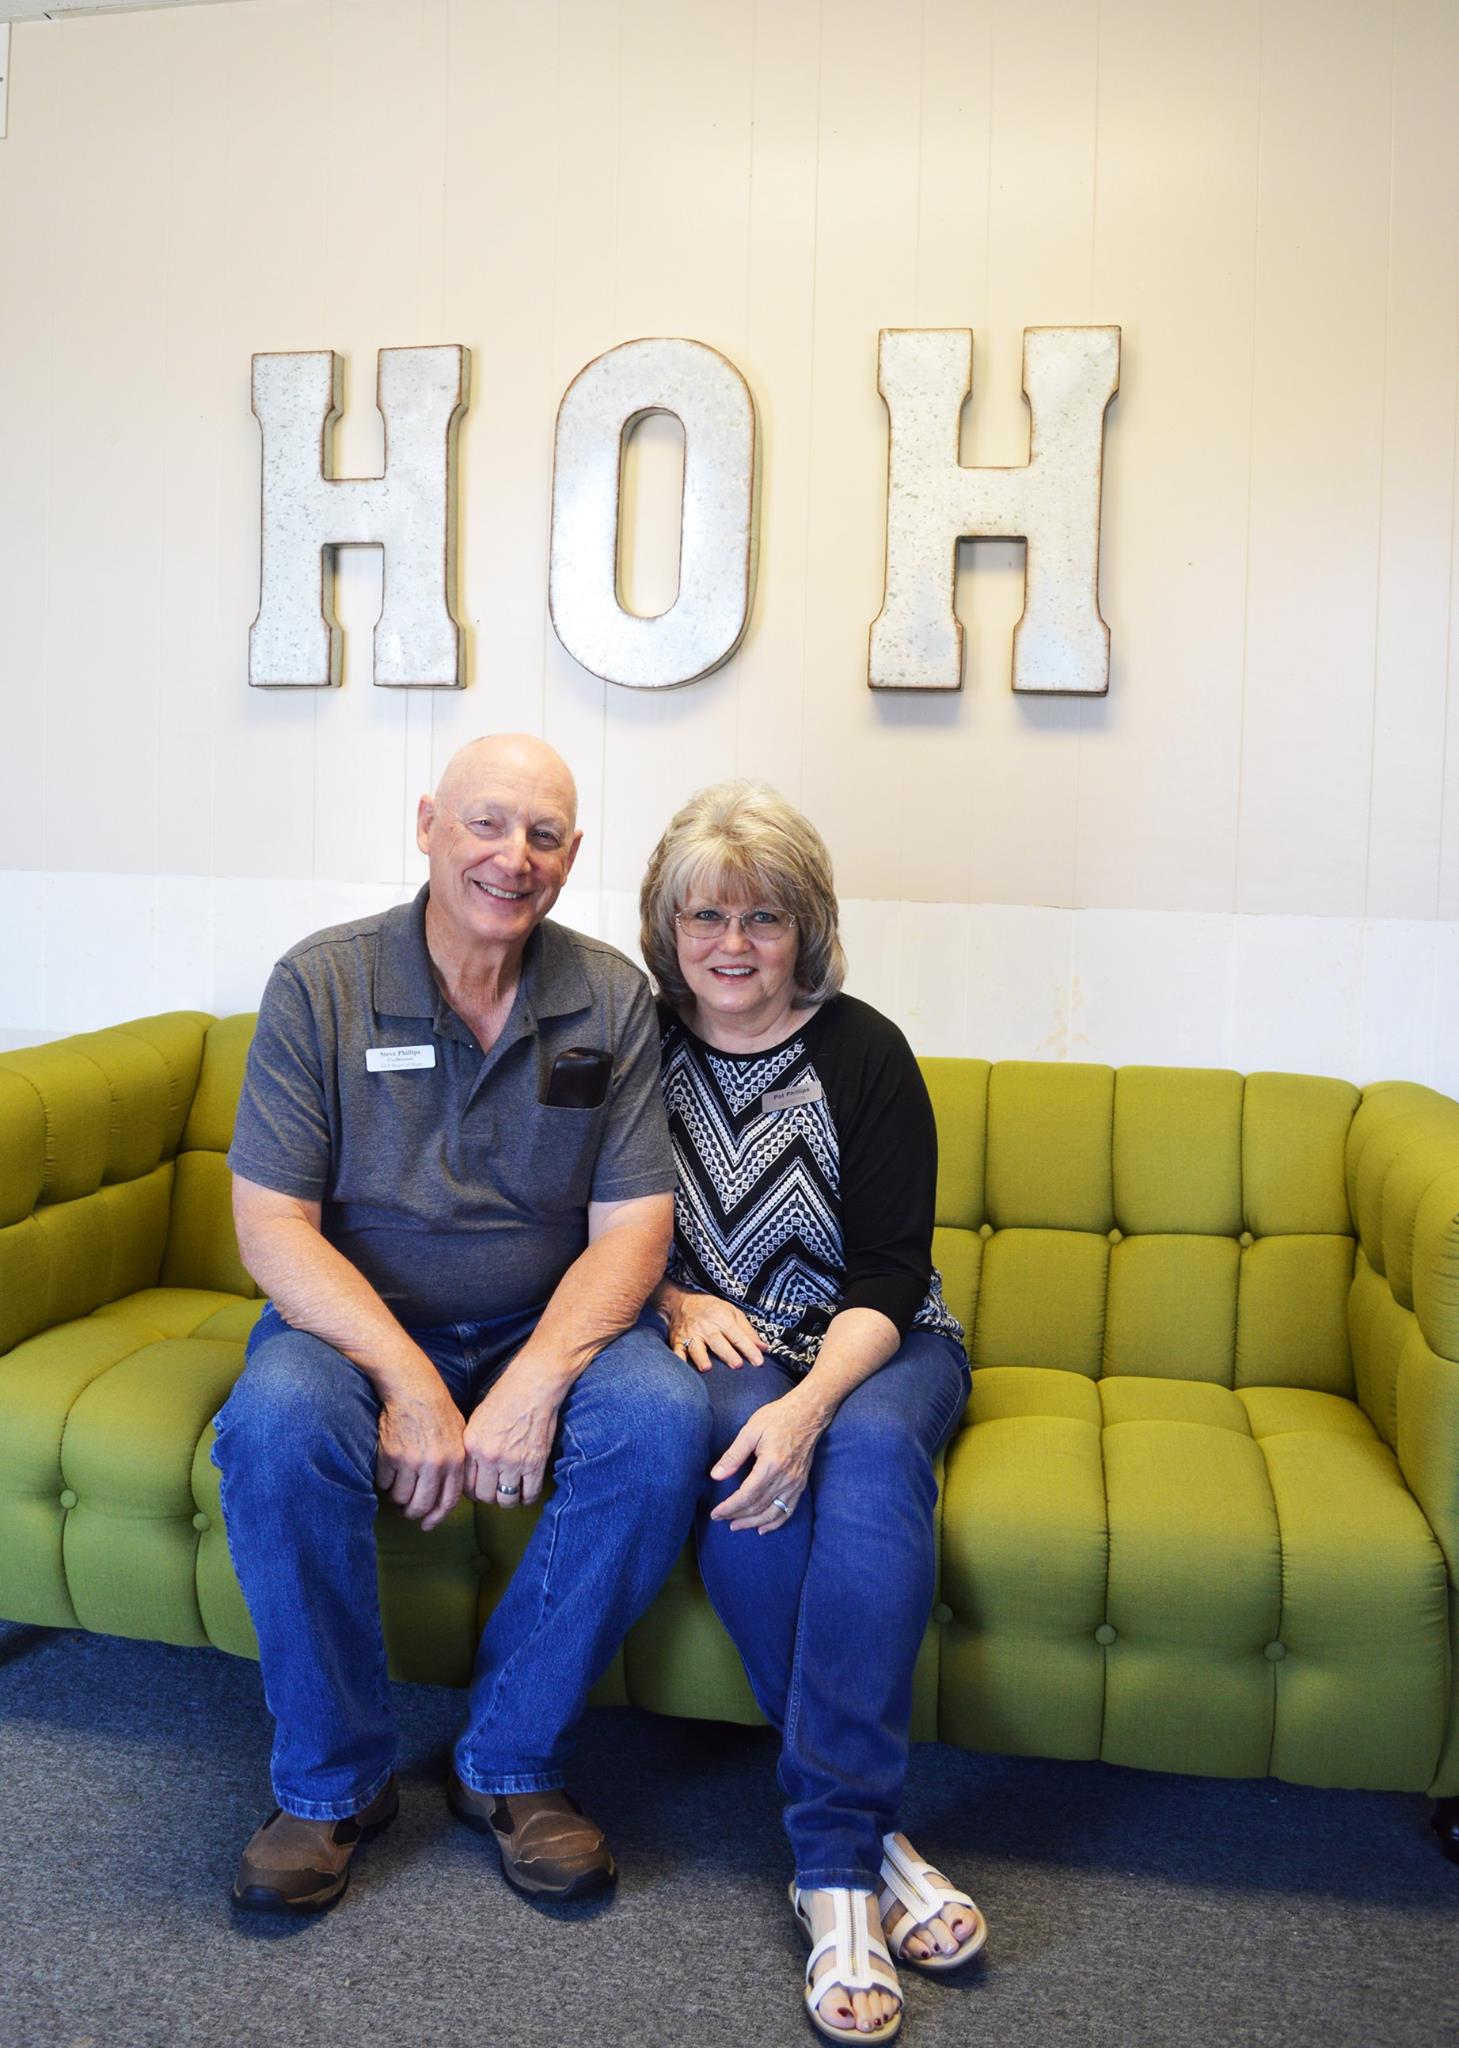 Meet the Directors of Heart of Hope Pregnancy Resource Center: Pat & Steve Phillips